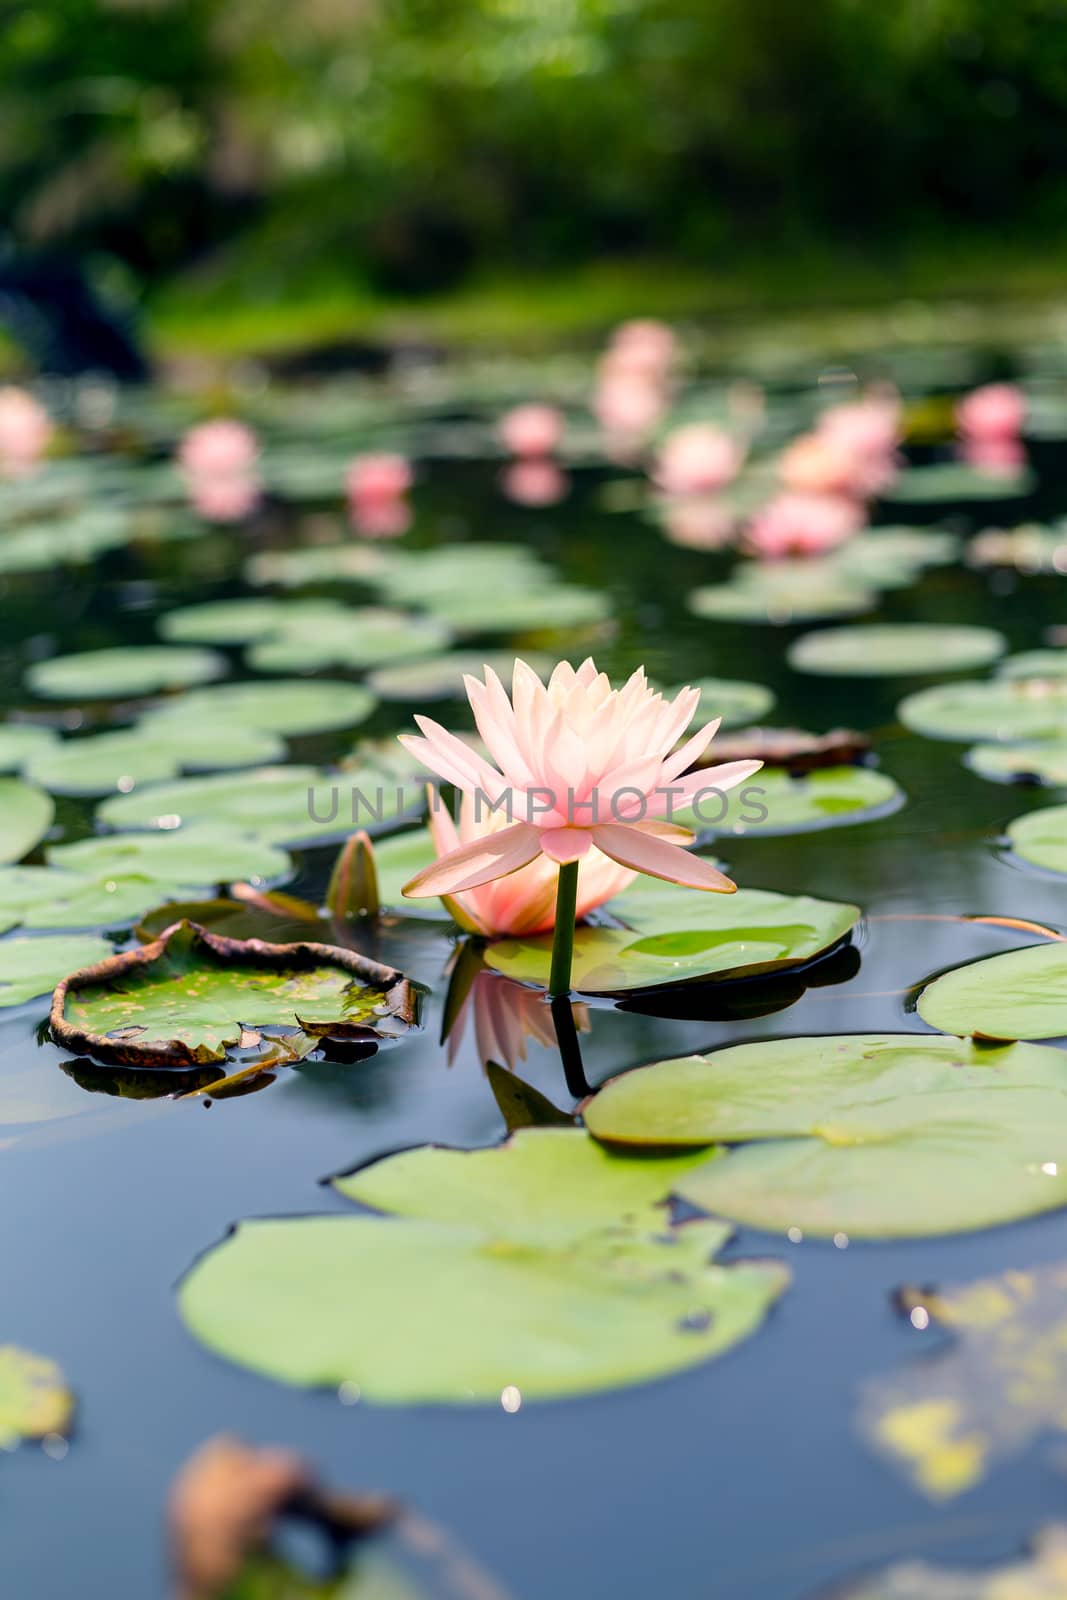 Lotus flower plants by leungchopan